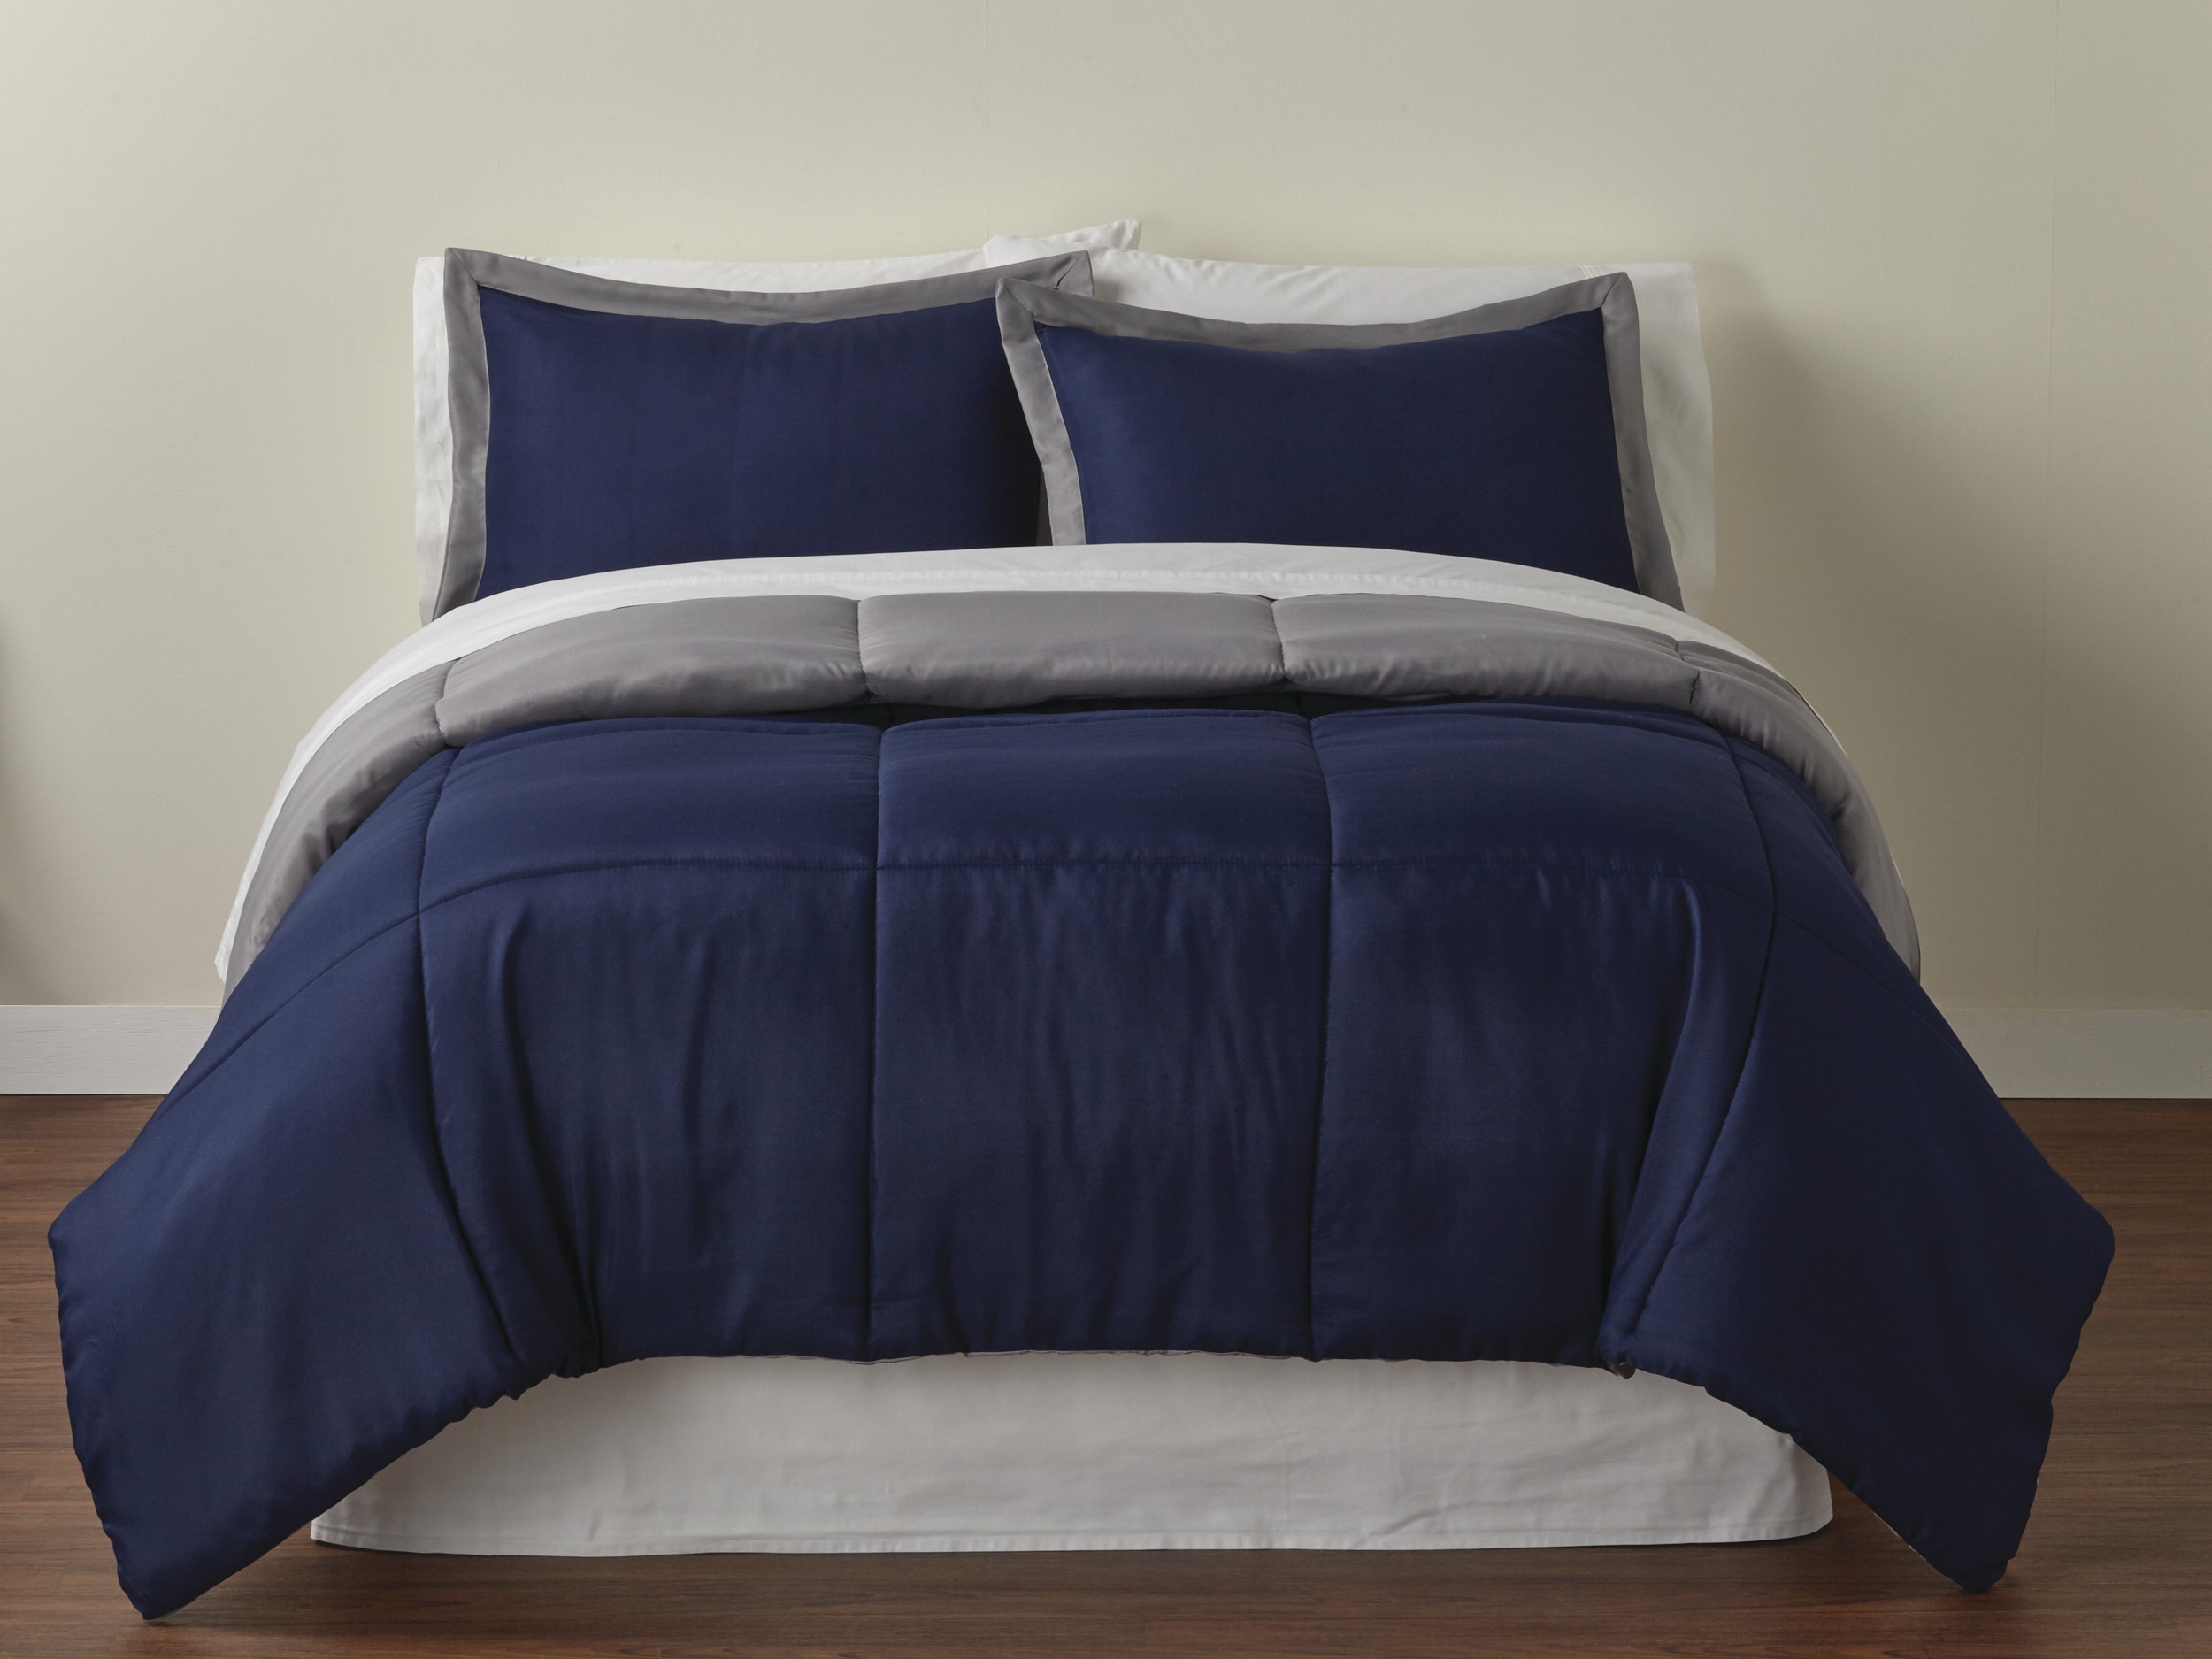 Colormate Reversible Comforter Set - Navy/Gray